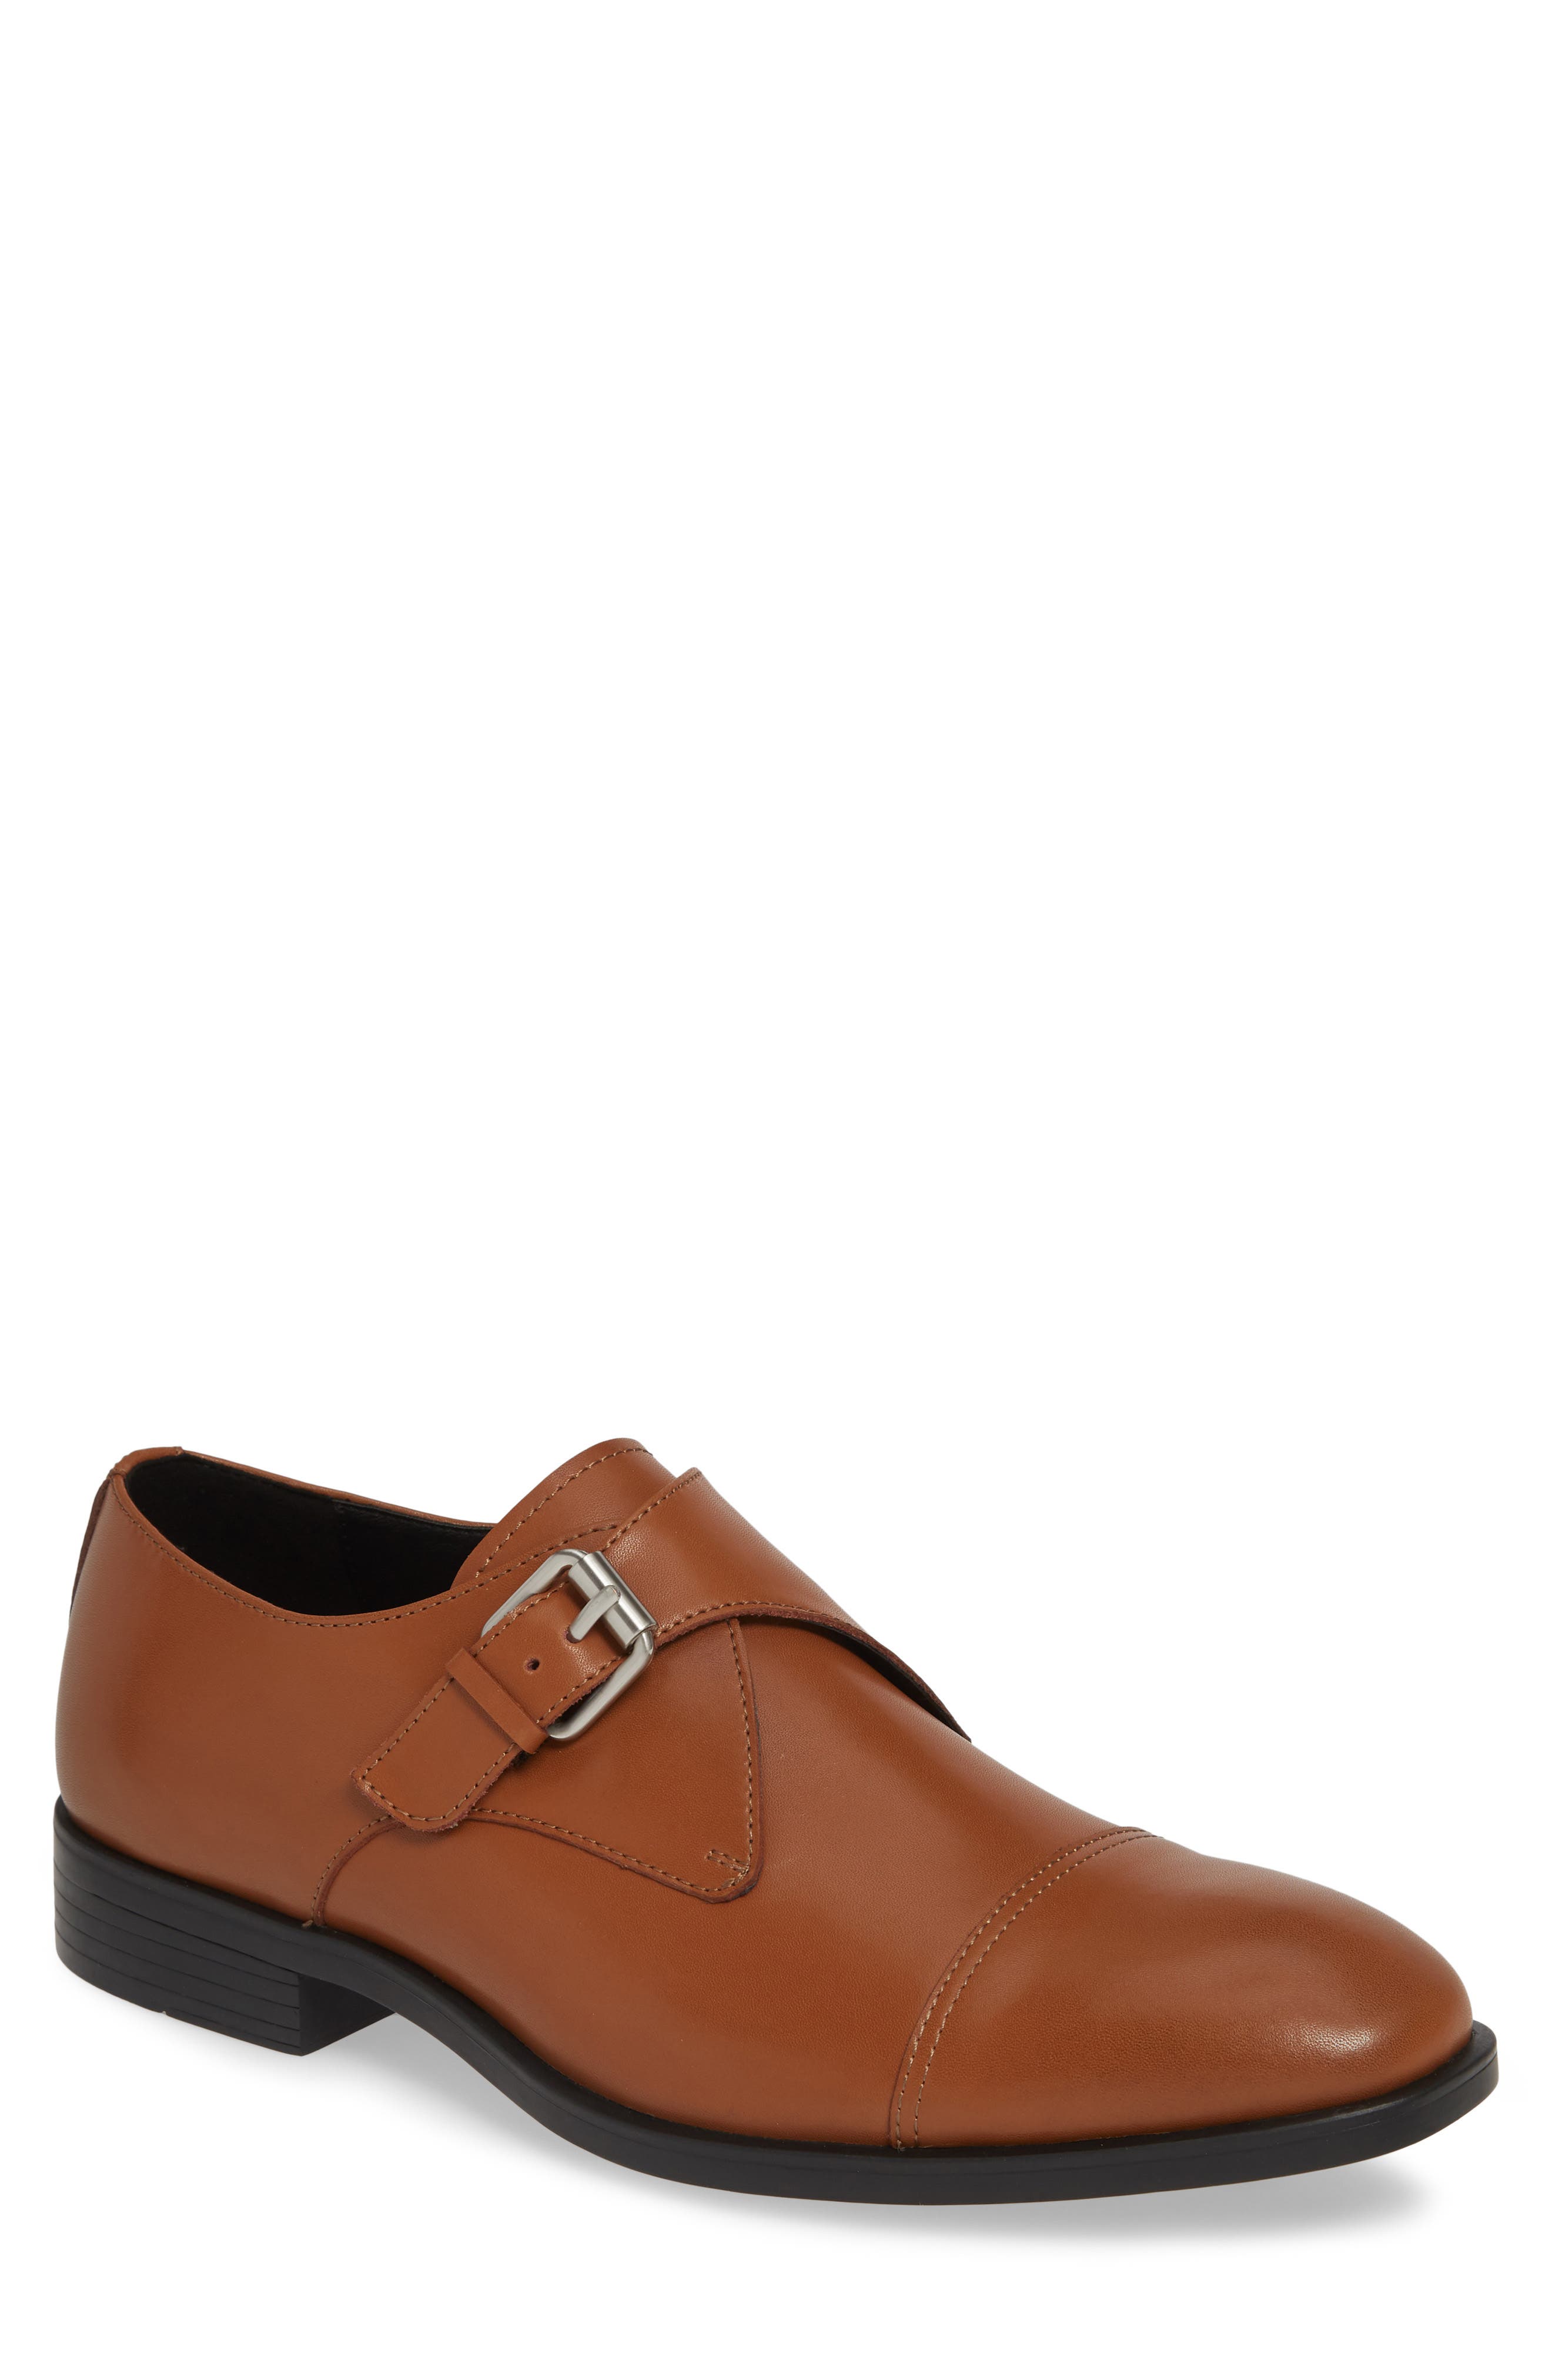 UPC 192675341189 product image for Men's Calvin Klein Channer Monk Strap Shoe, Size 9 M - Brown | upcitemdb.com